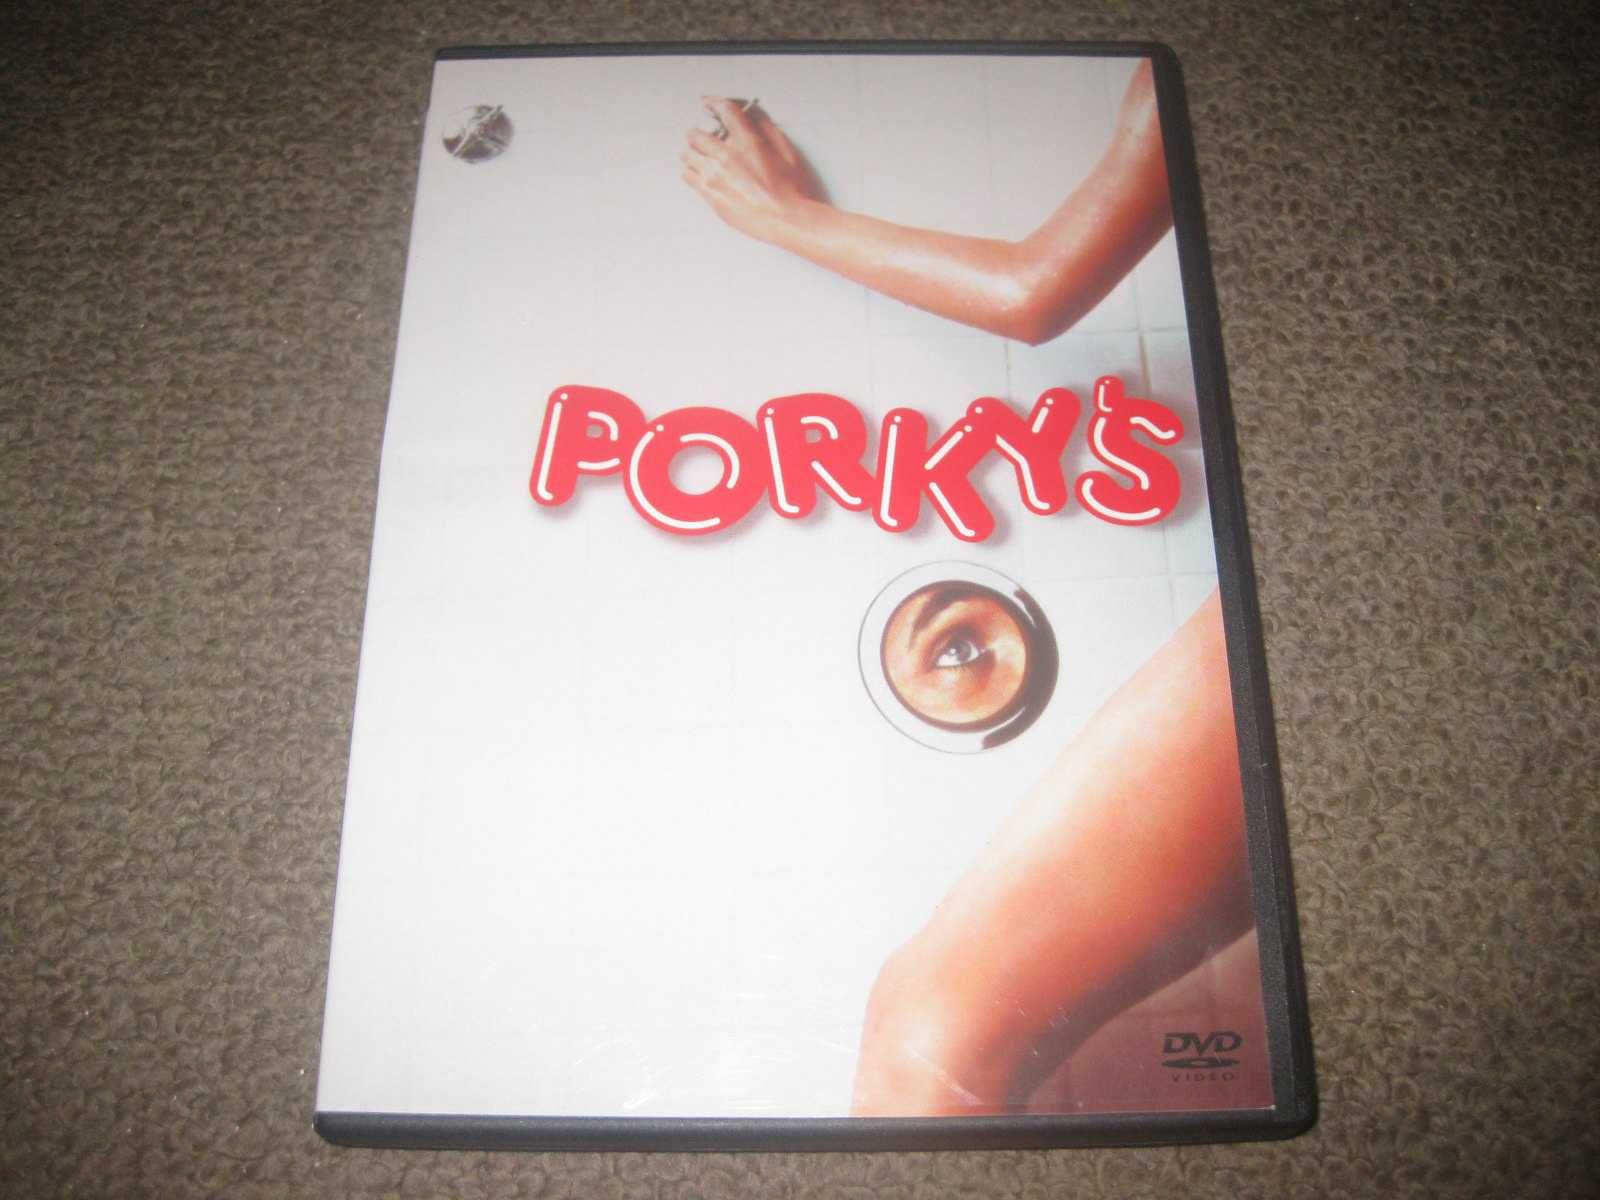 DVD "Porky's" de Bob Clark